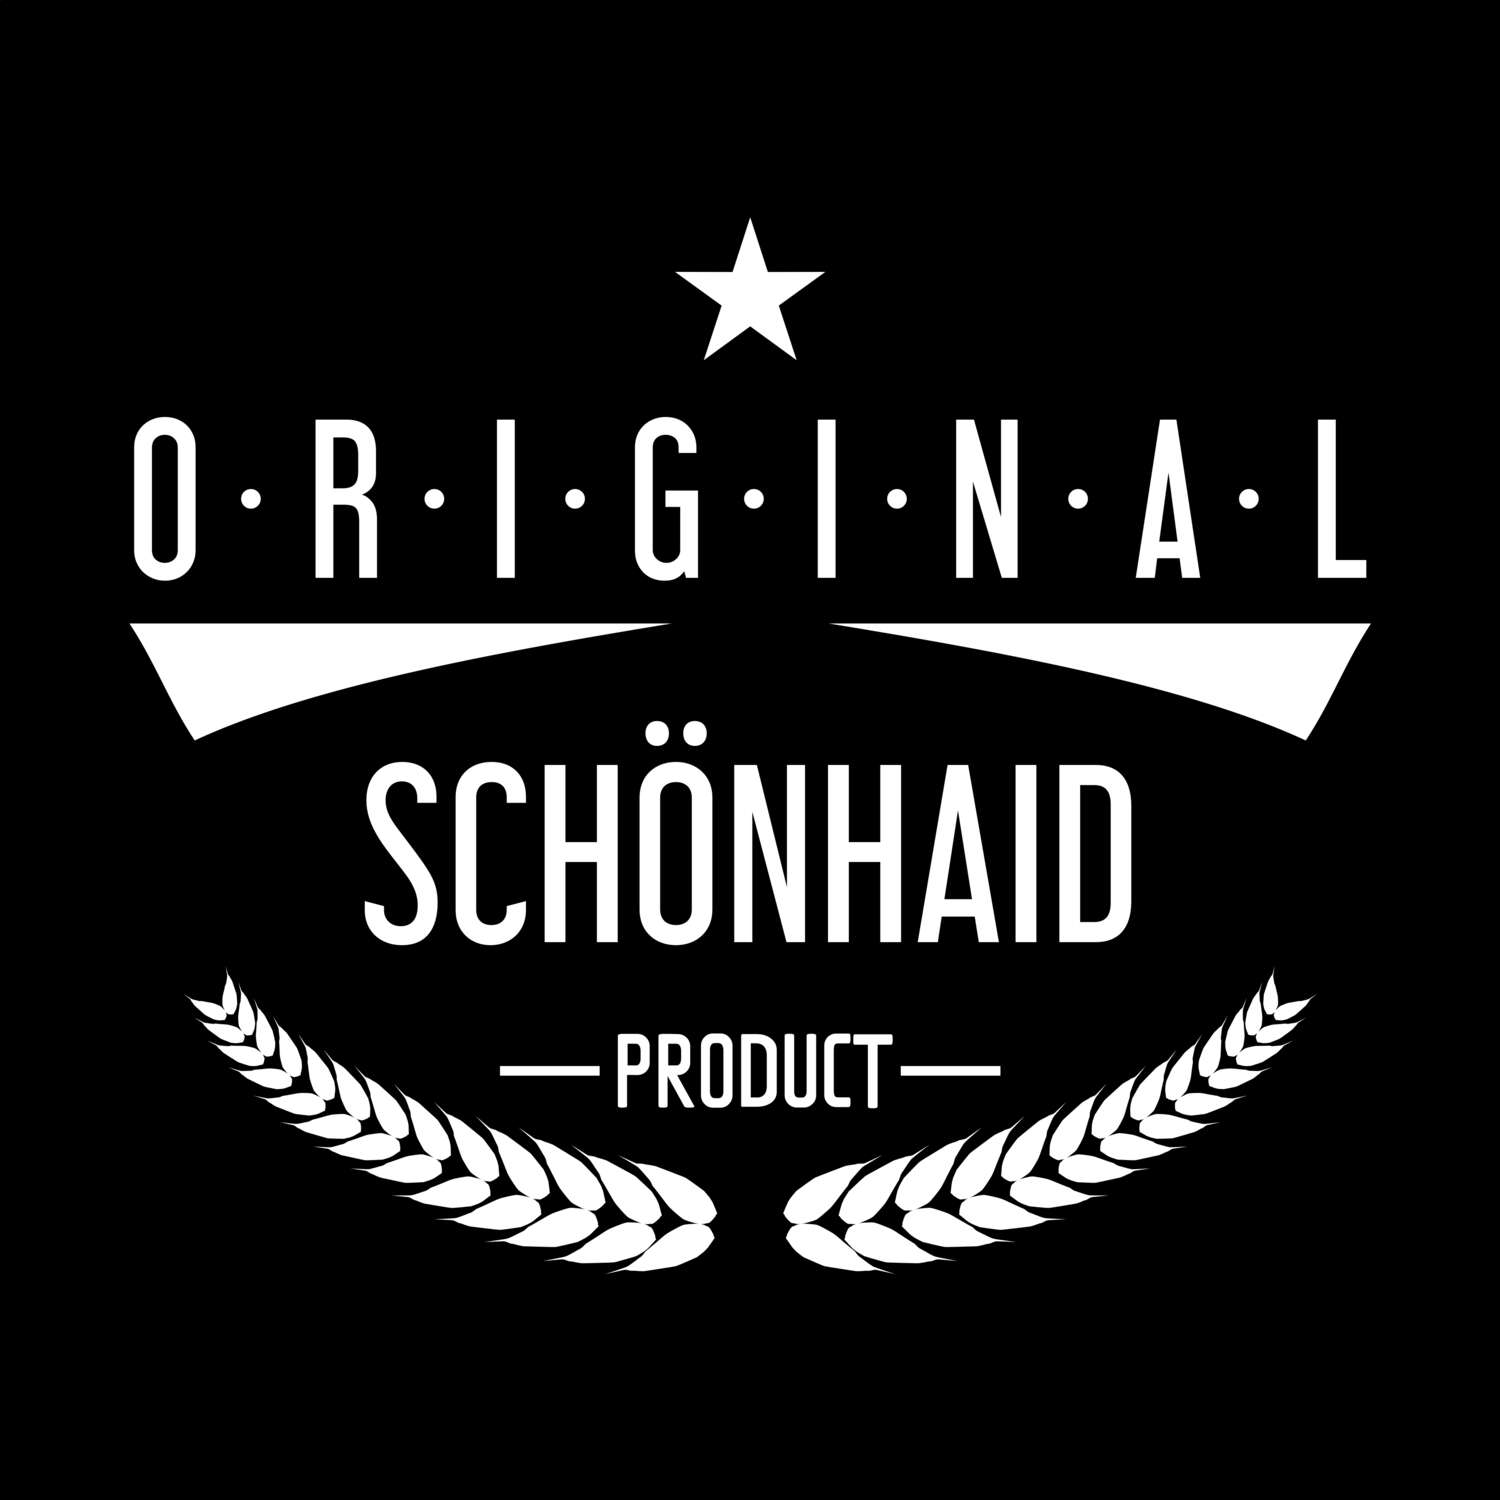 Schönhaid T-Shirt »Original Product«